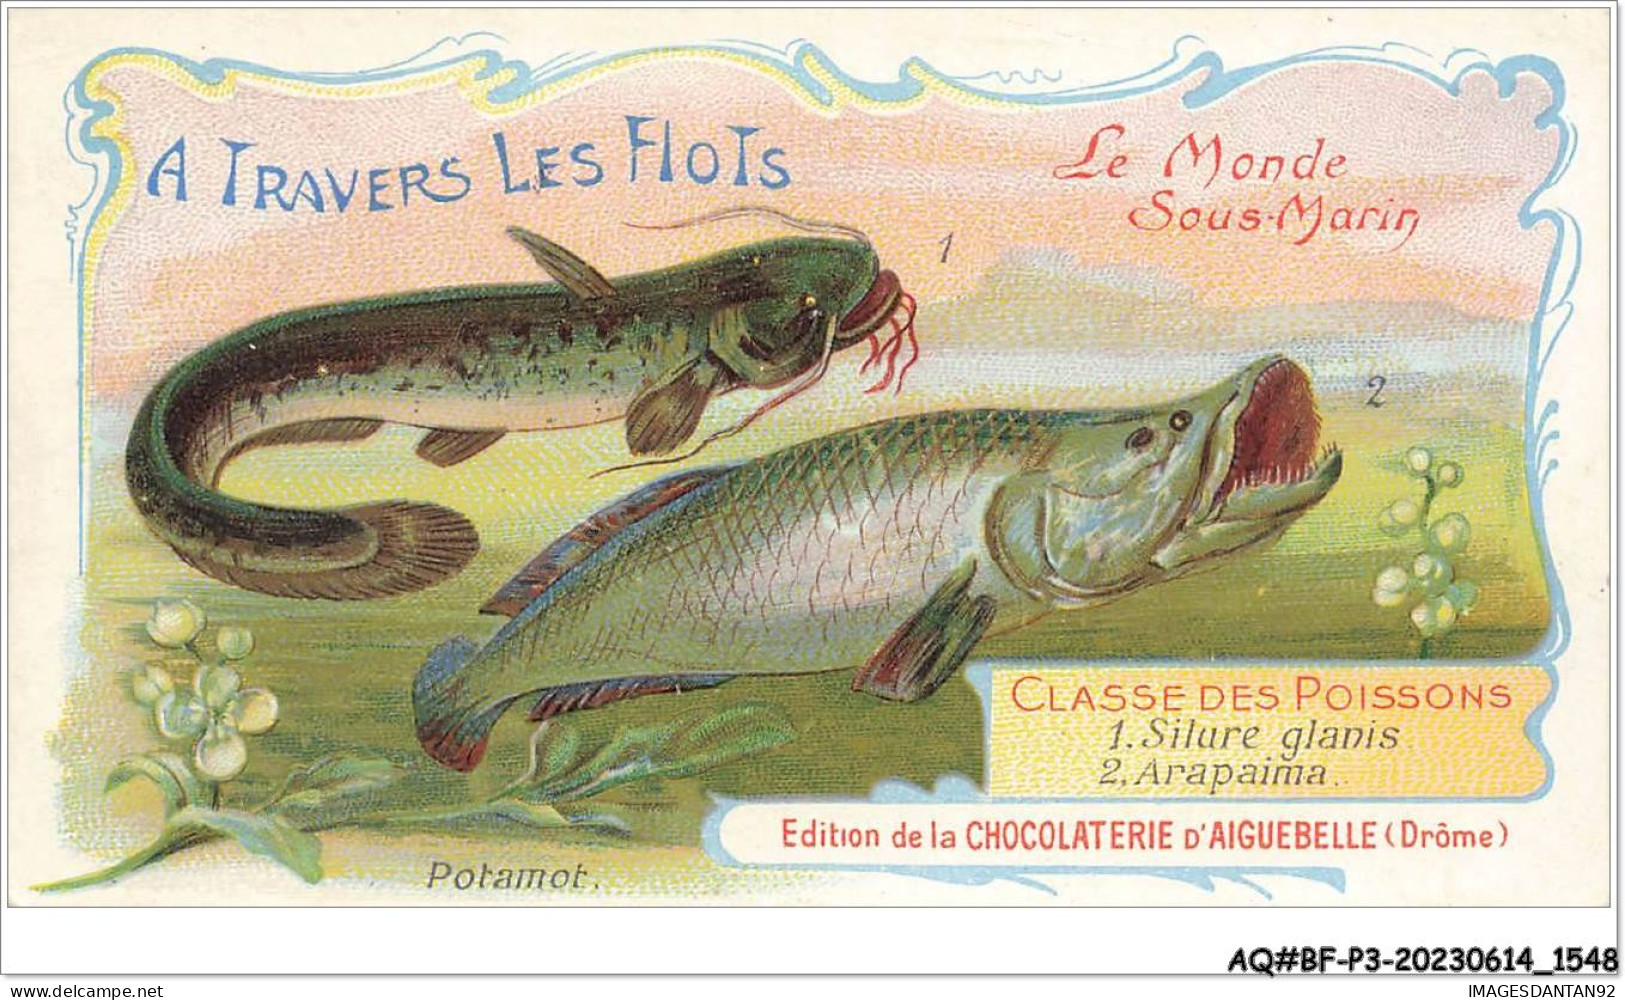 AQ#BFP3-CHROMOS-0773 - Chocolat D'Aiguebelle - Le Monde Sous-Marin - Potamot - Aiguebelle